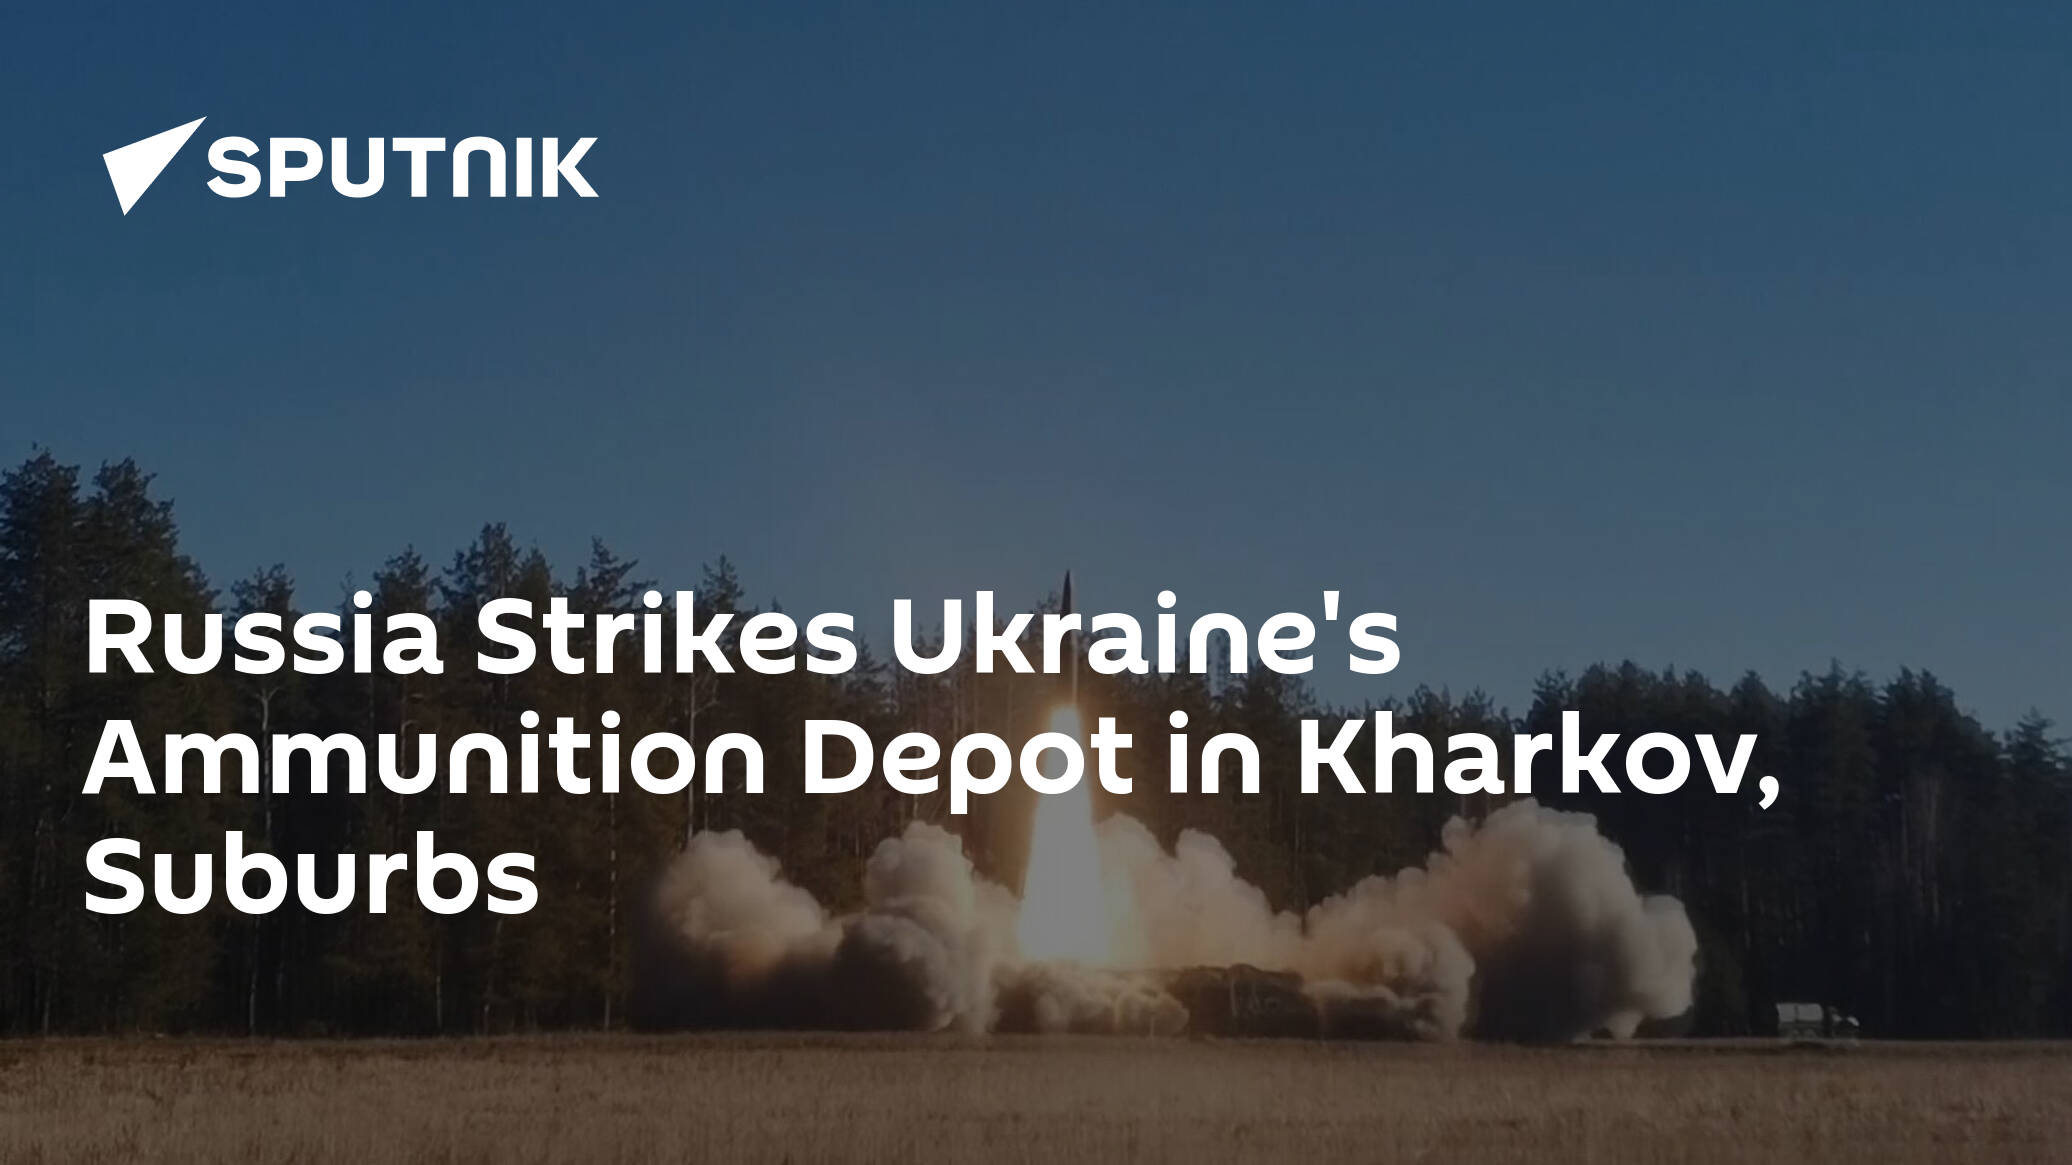 Russia Strikes Ukraine's Ammunition Depot in Kharkov, Suburbs